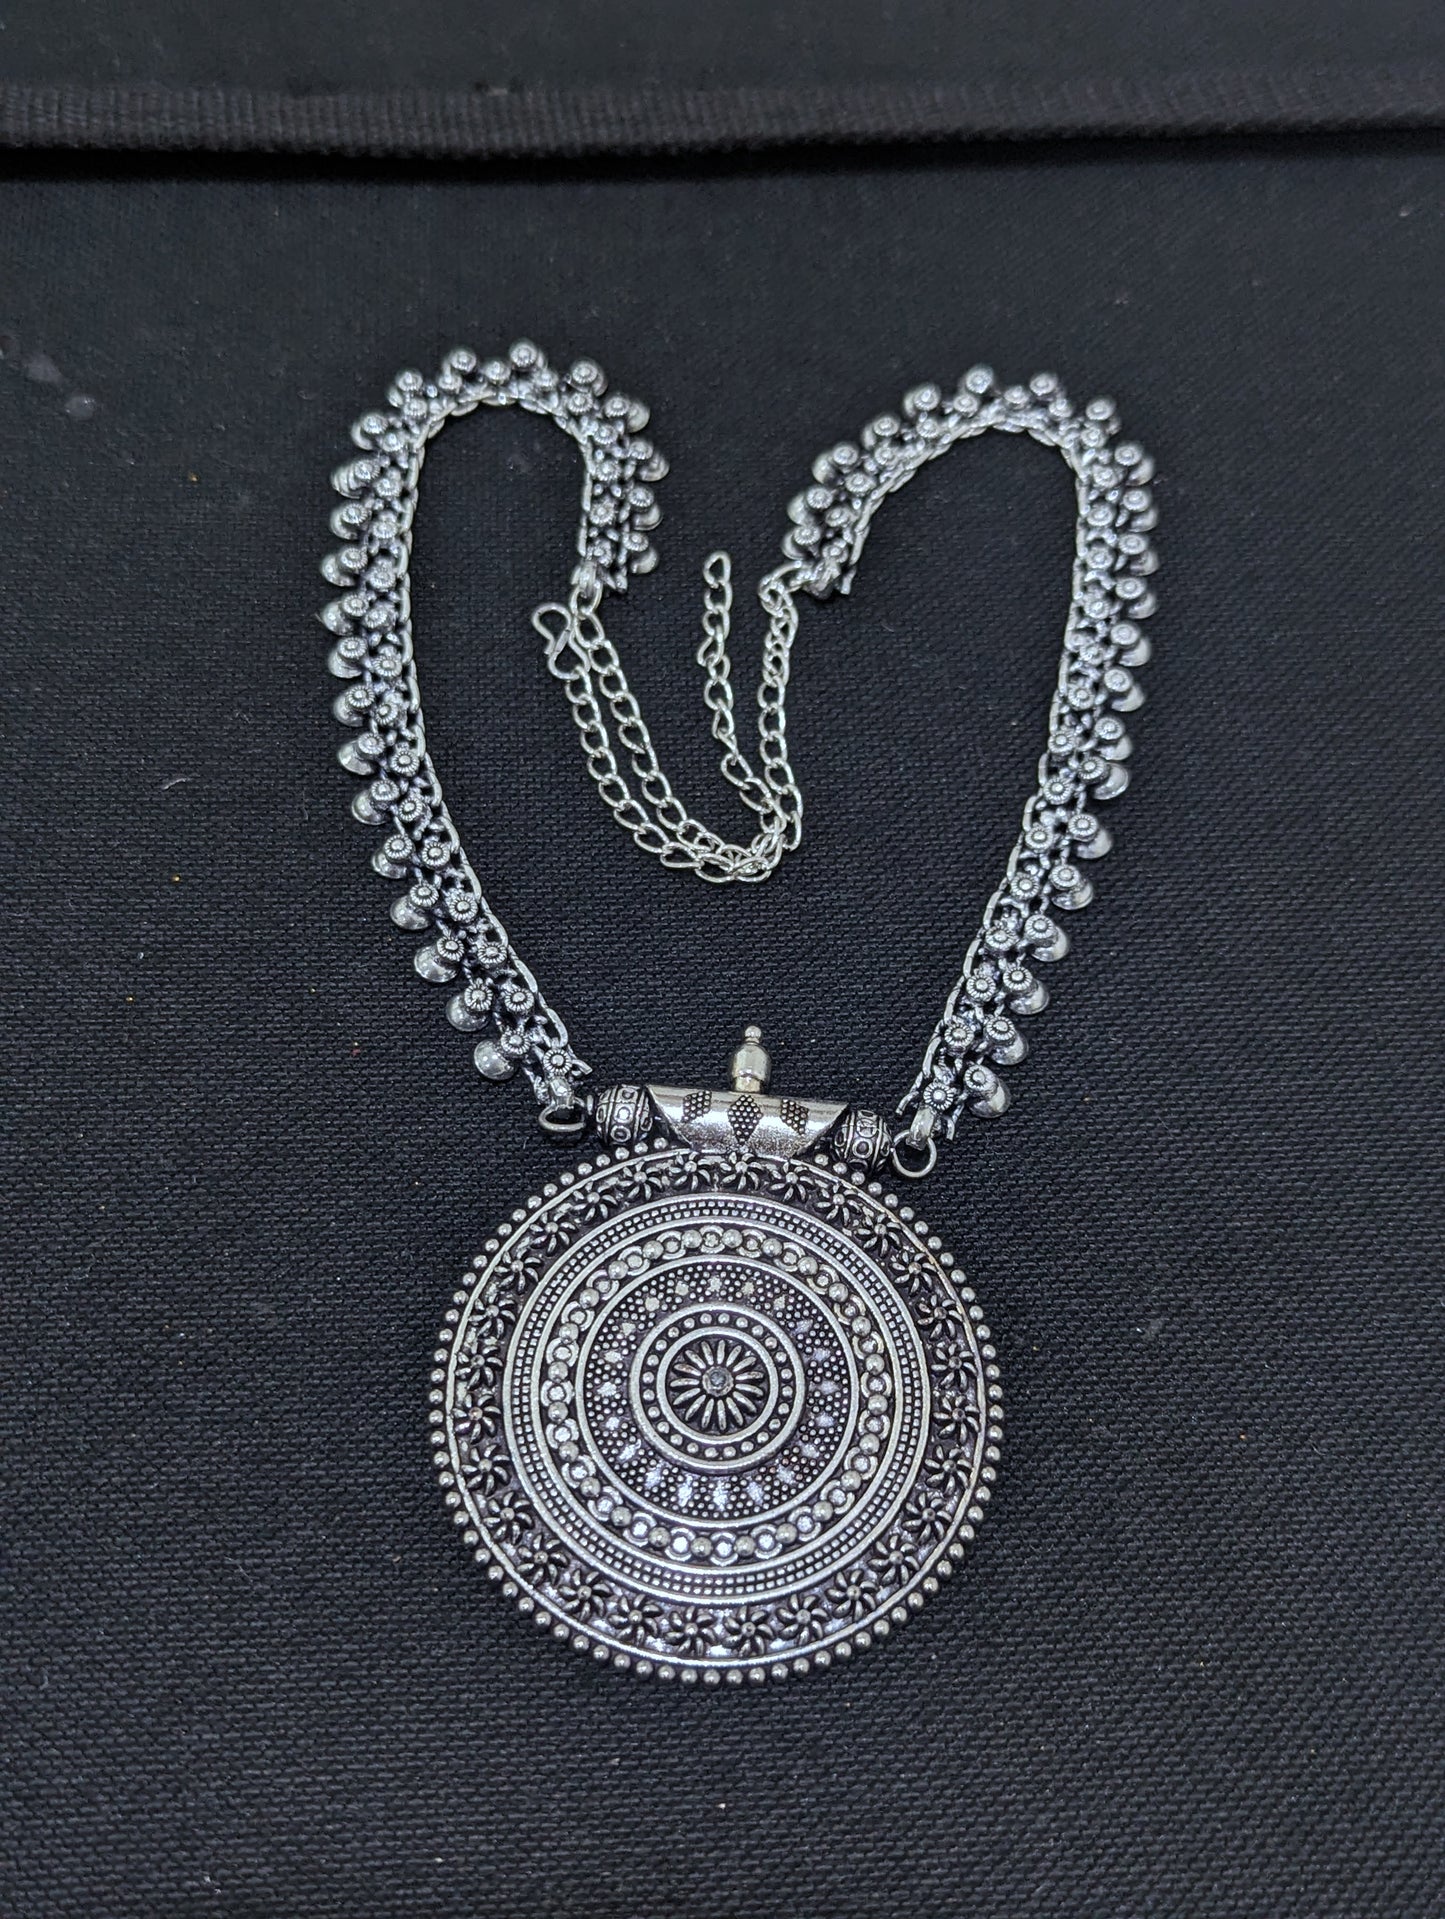 Oxidized Silver Long Chain Necklace - D1